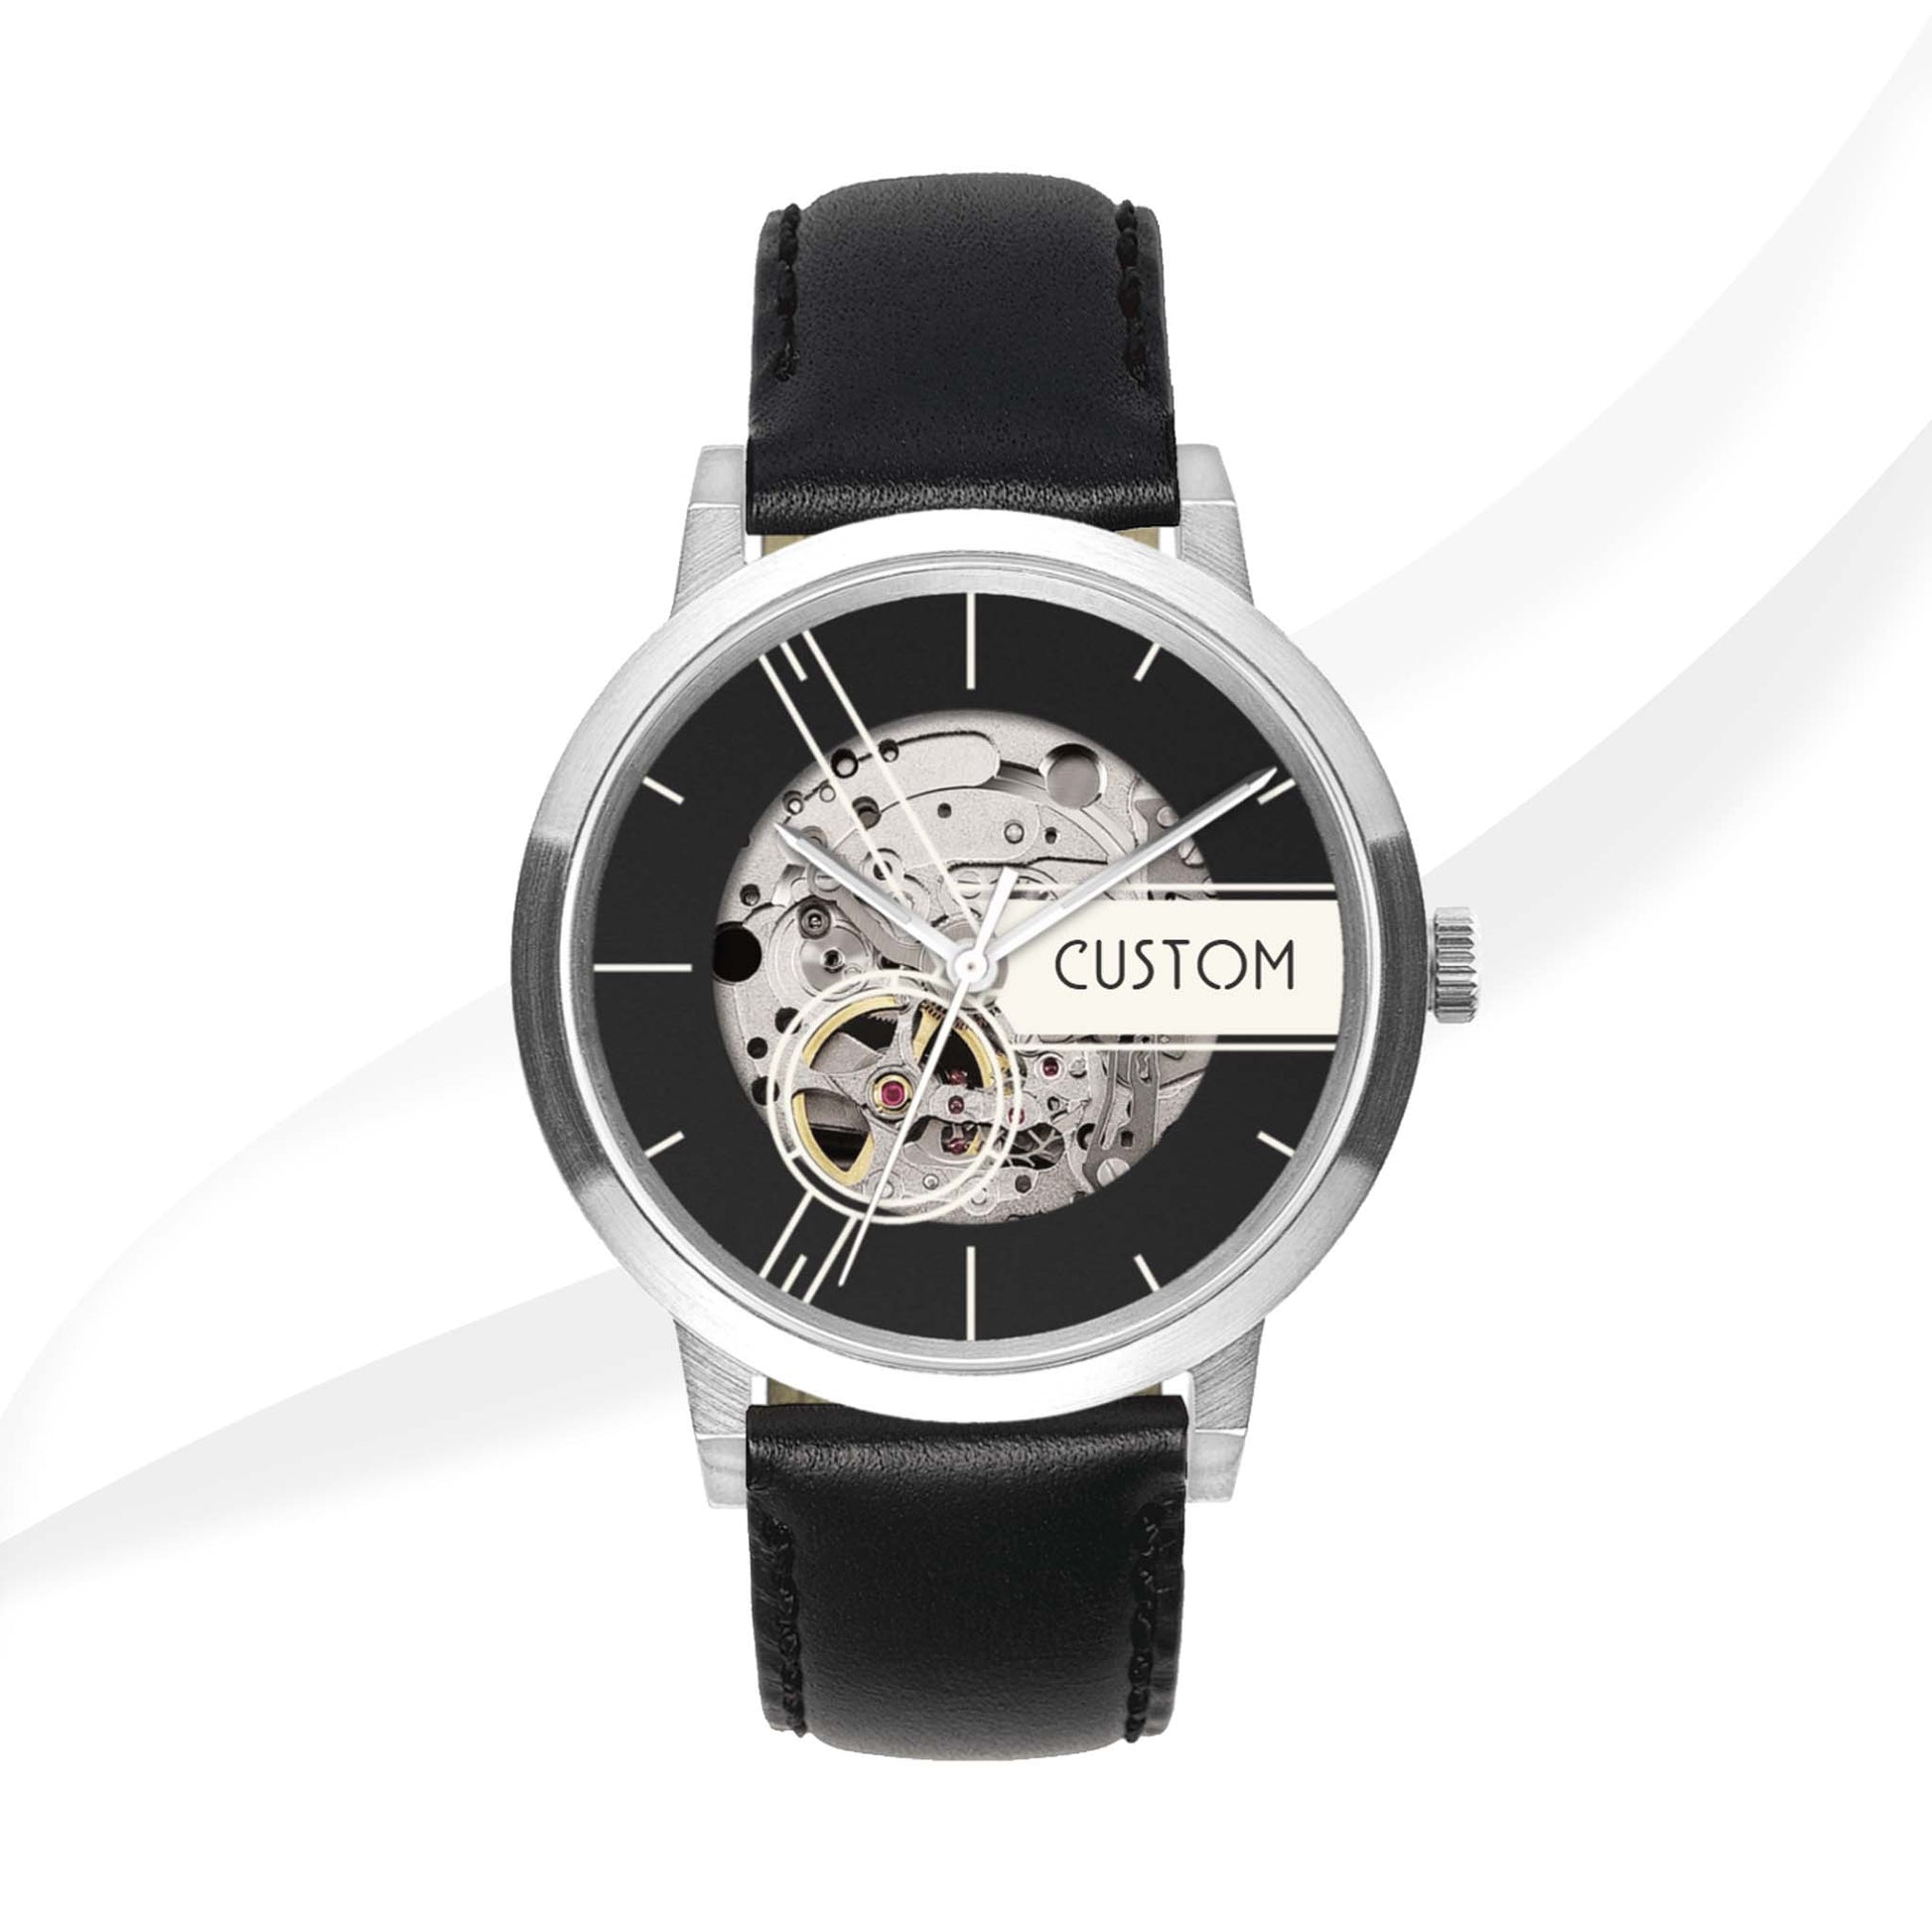 EONIQ custom skeleton watch - silver and black 